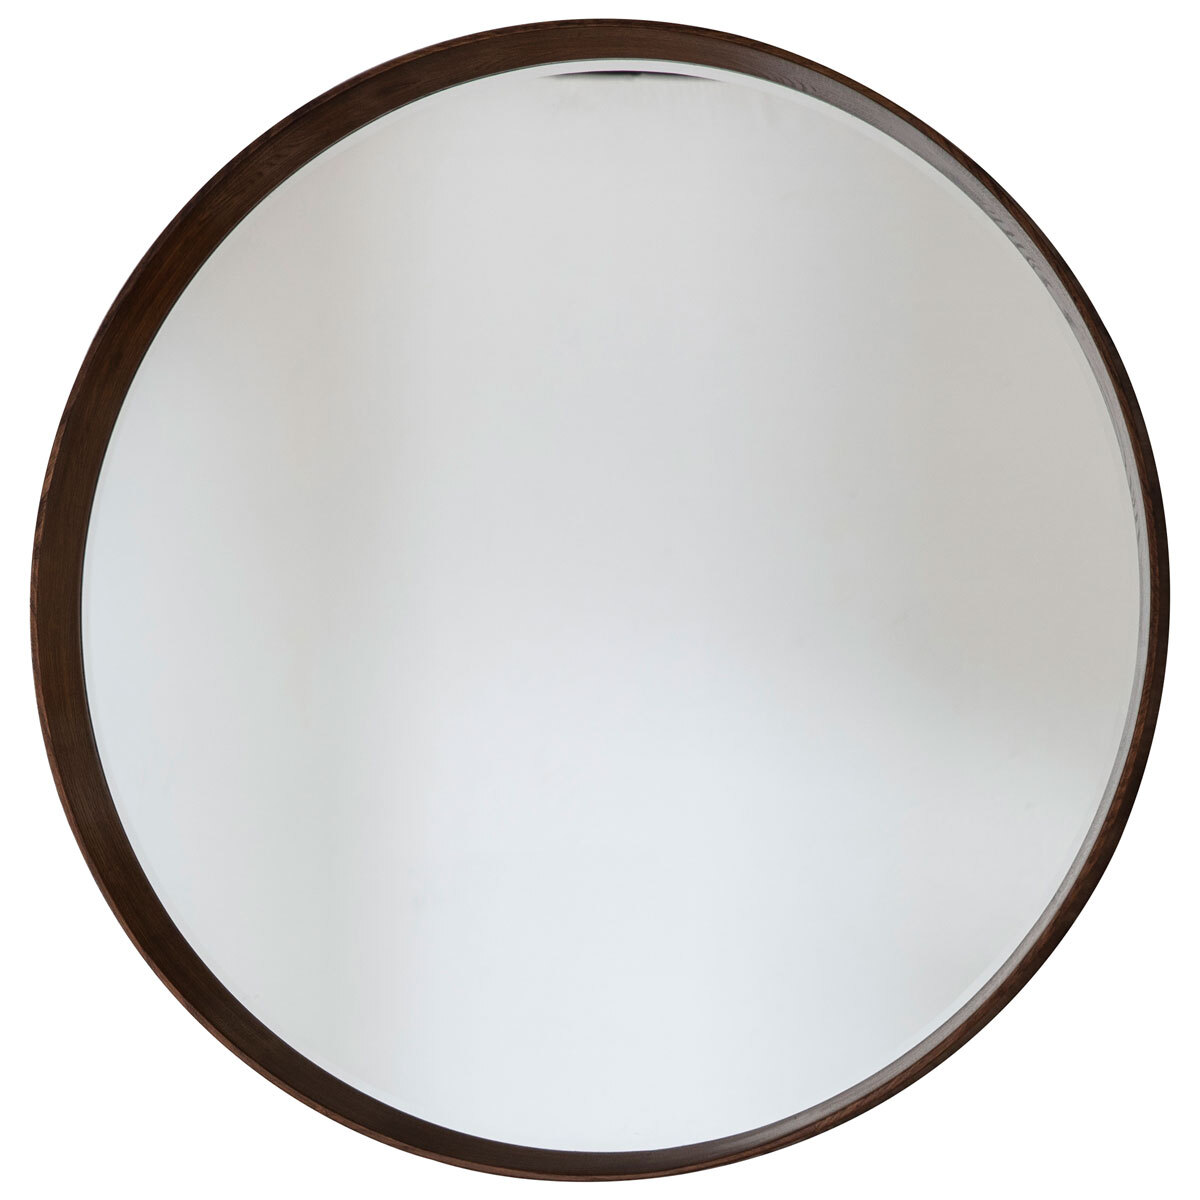 Gallery Keynes Walnut round mirror